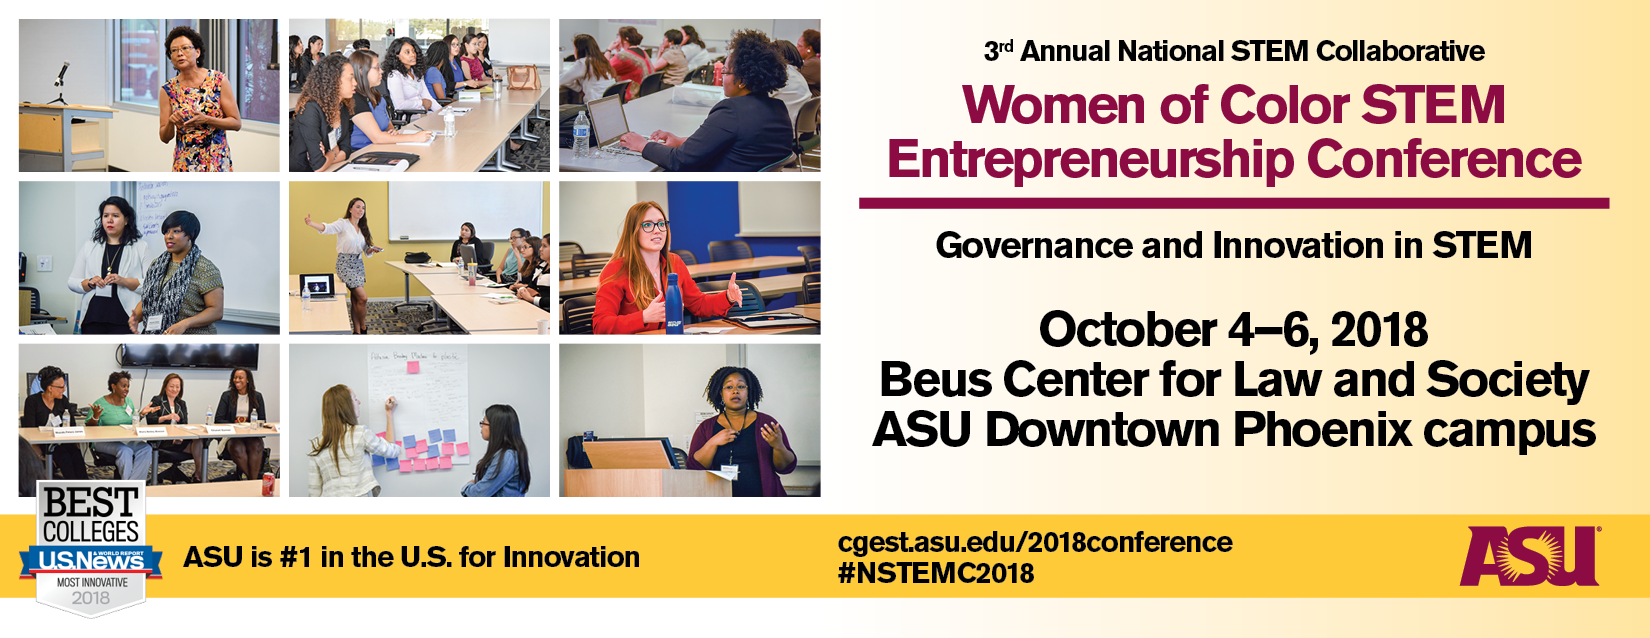 Women of Color STEM Entrepreneurship Conference: Governance and Innovation in STEM